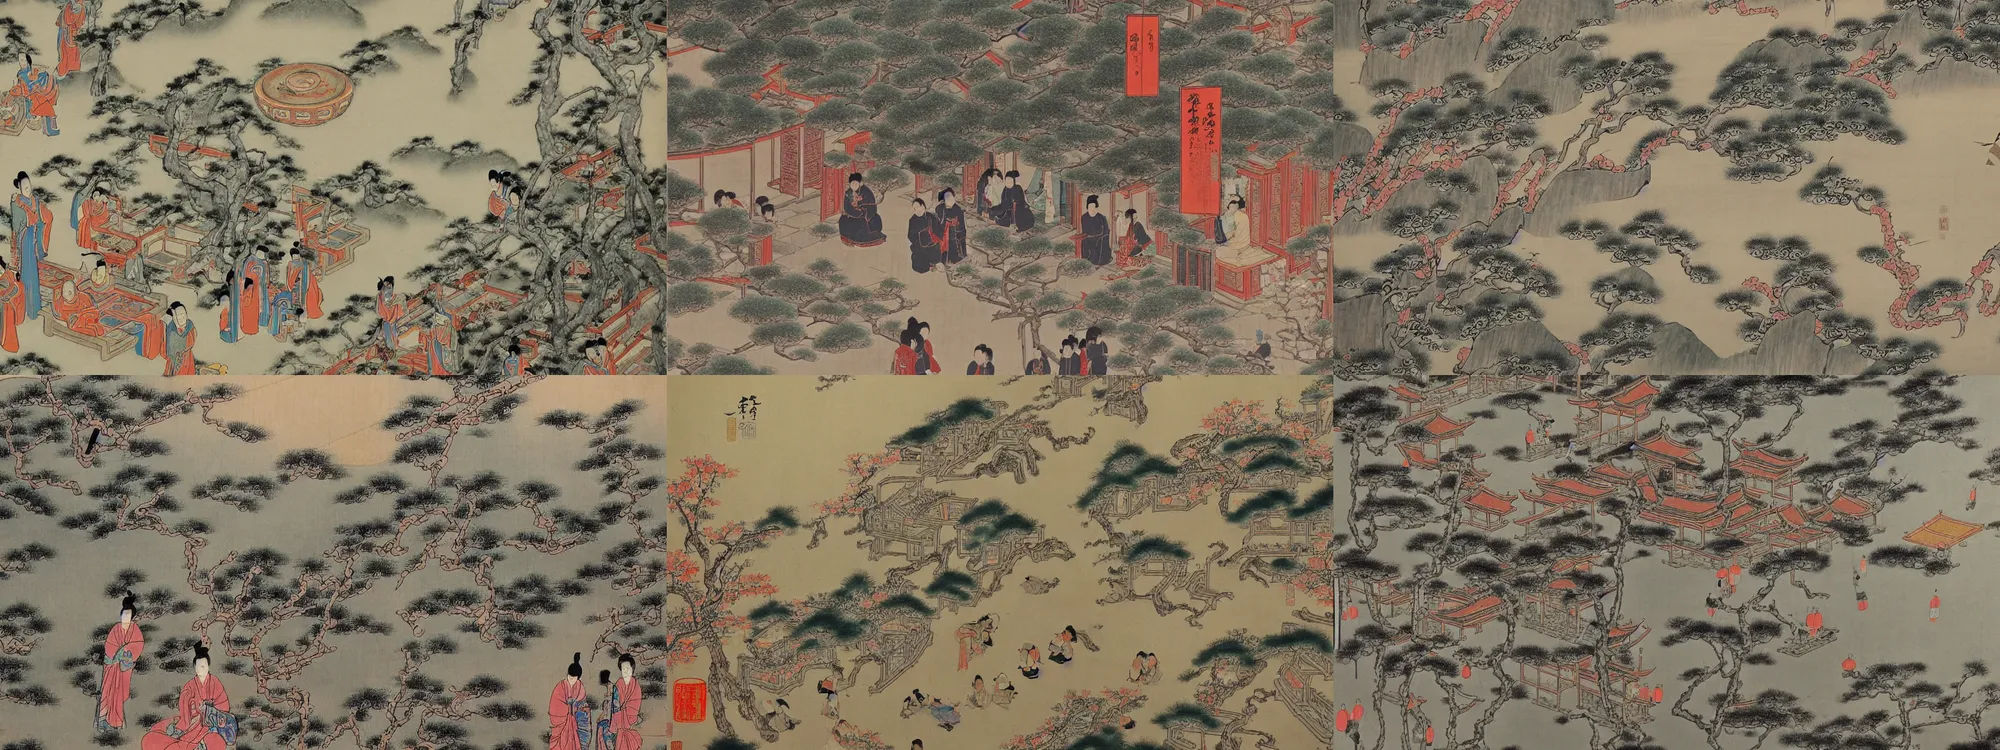 Image similar to beautiful 1 9 6 0 s painting of ancient china, miyazaki, cinematic, intricate detail